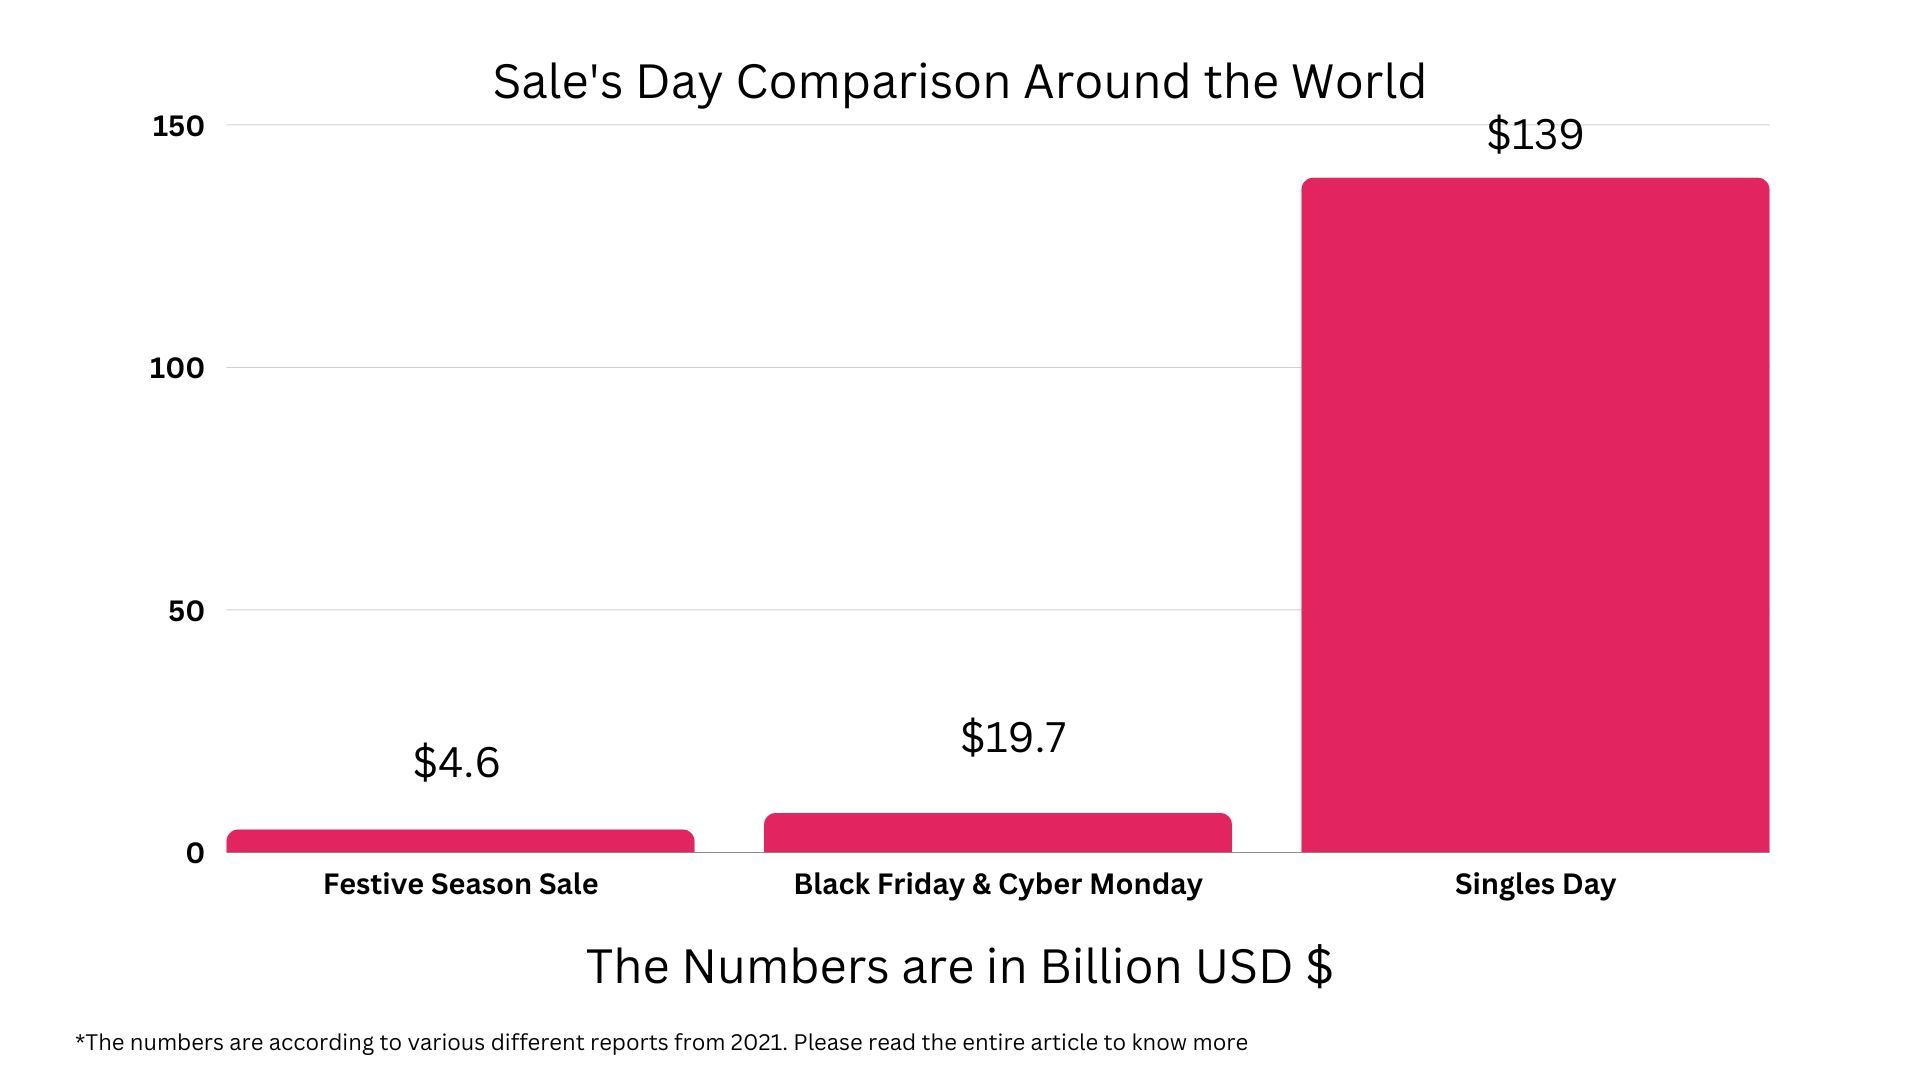 Biggest Sales Around the World - Singles Day Vs Black Friday Vs Festive  Season Sale